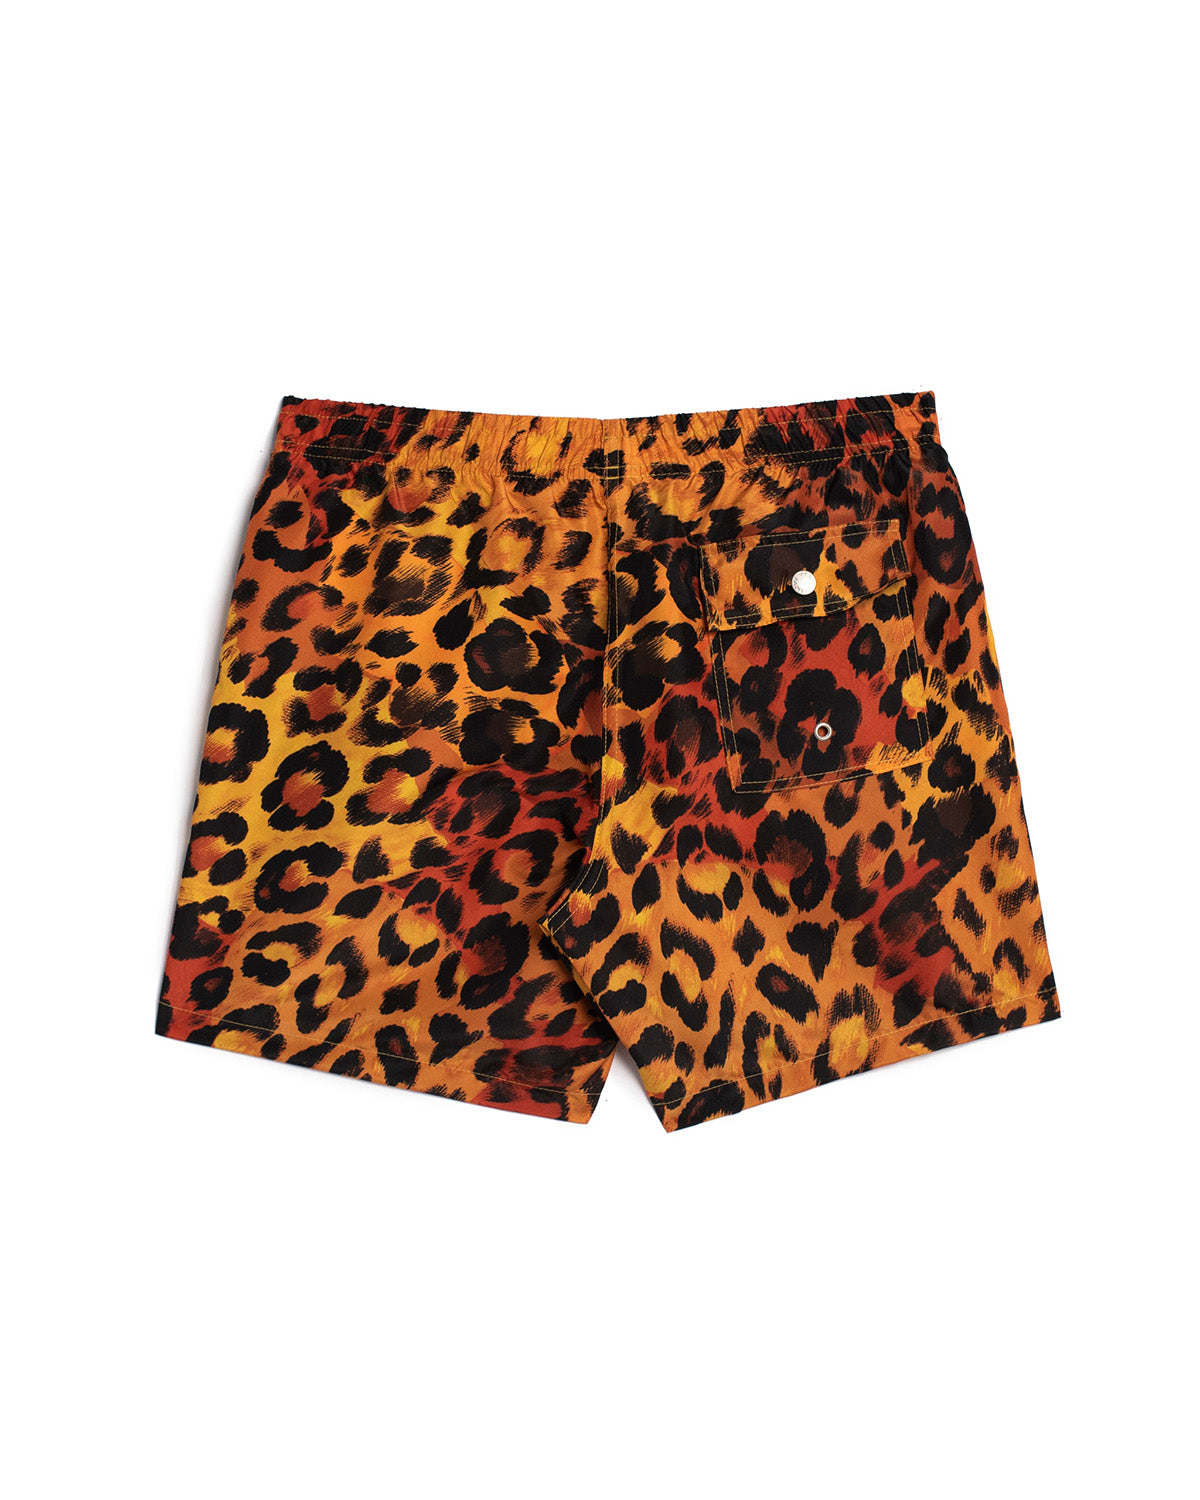 back view of orange Bather swim trunk with a black leopard pattern 